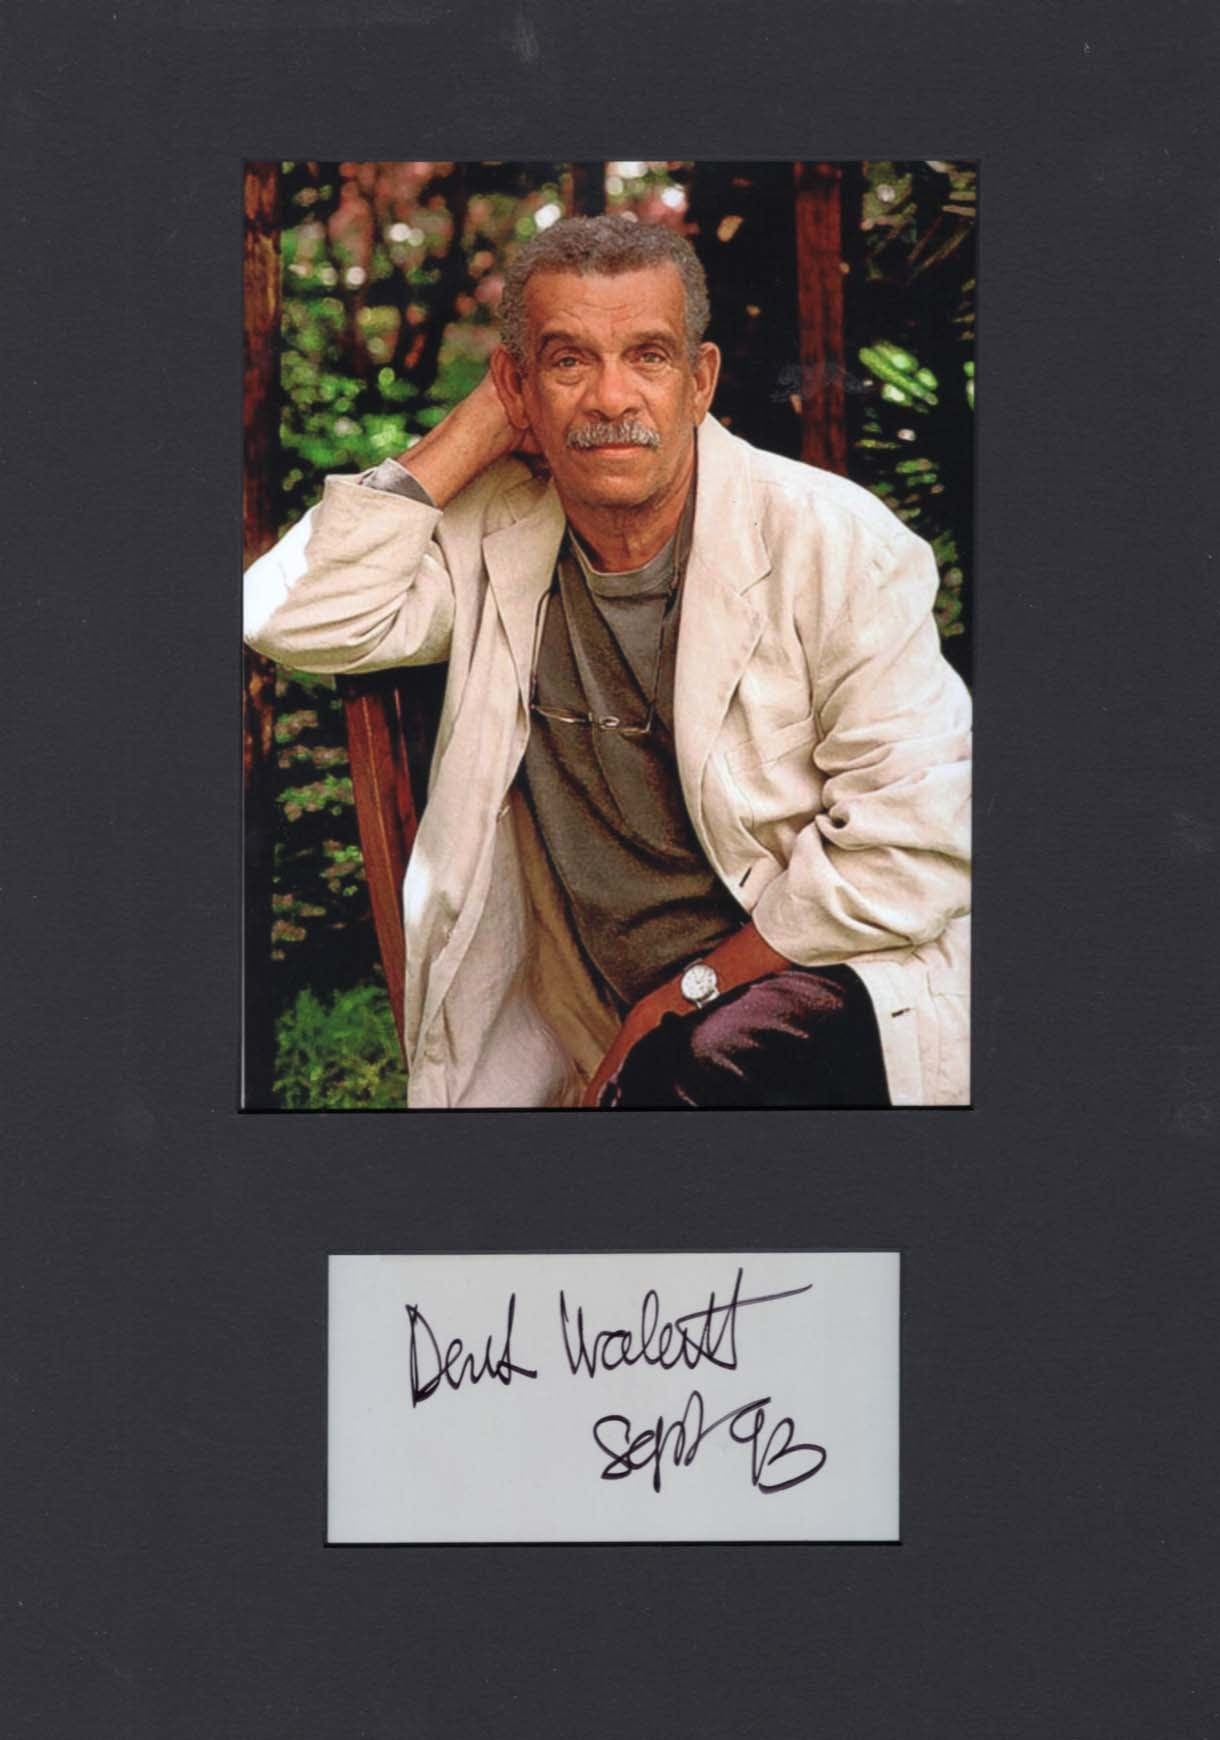 Derek Walcott Autograph